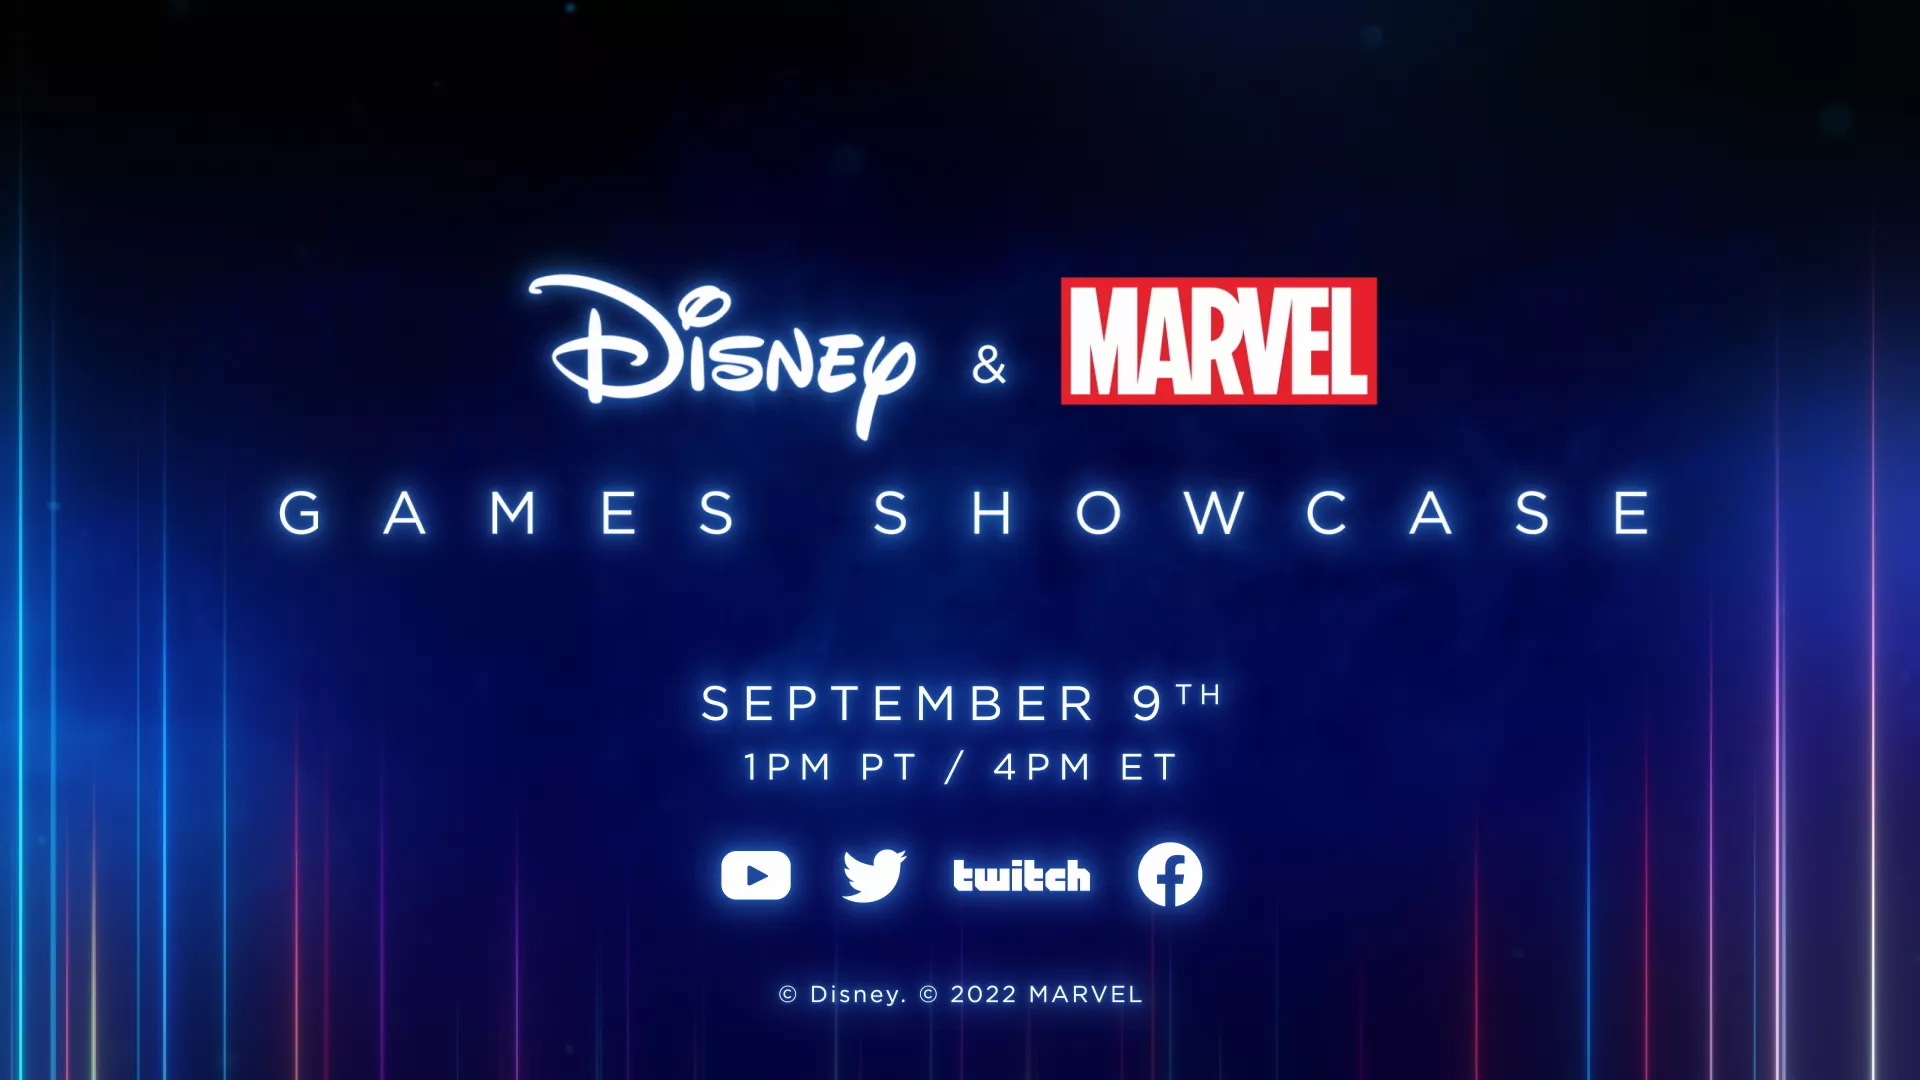 Disney & Marvel Games Showcase angekündigt Heropic